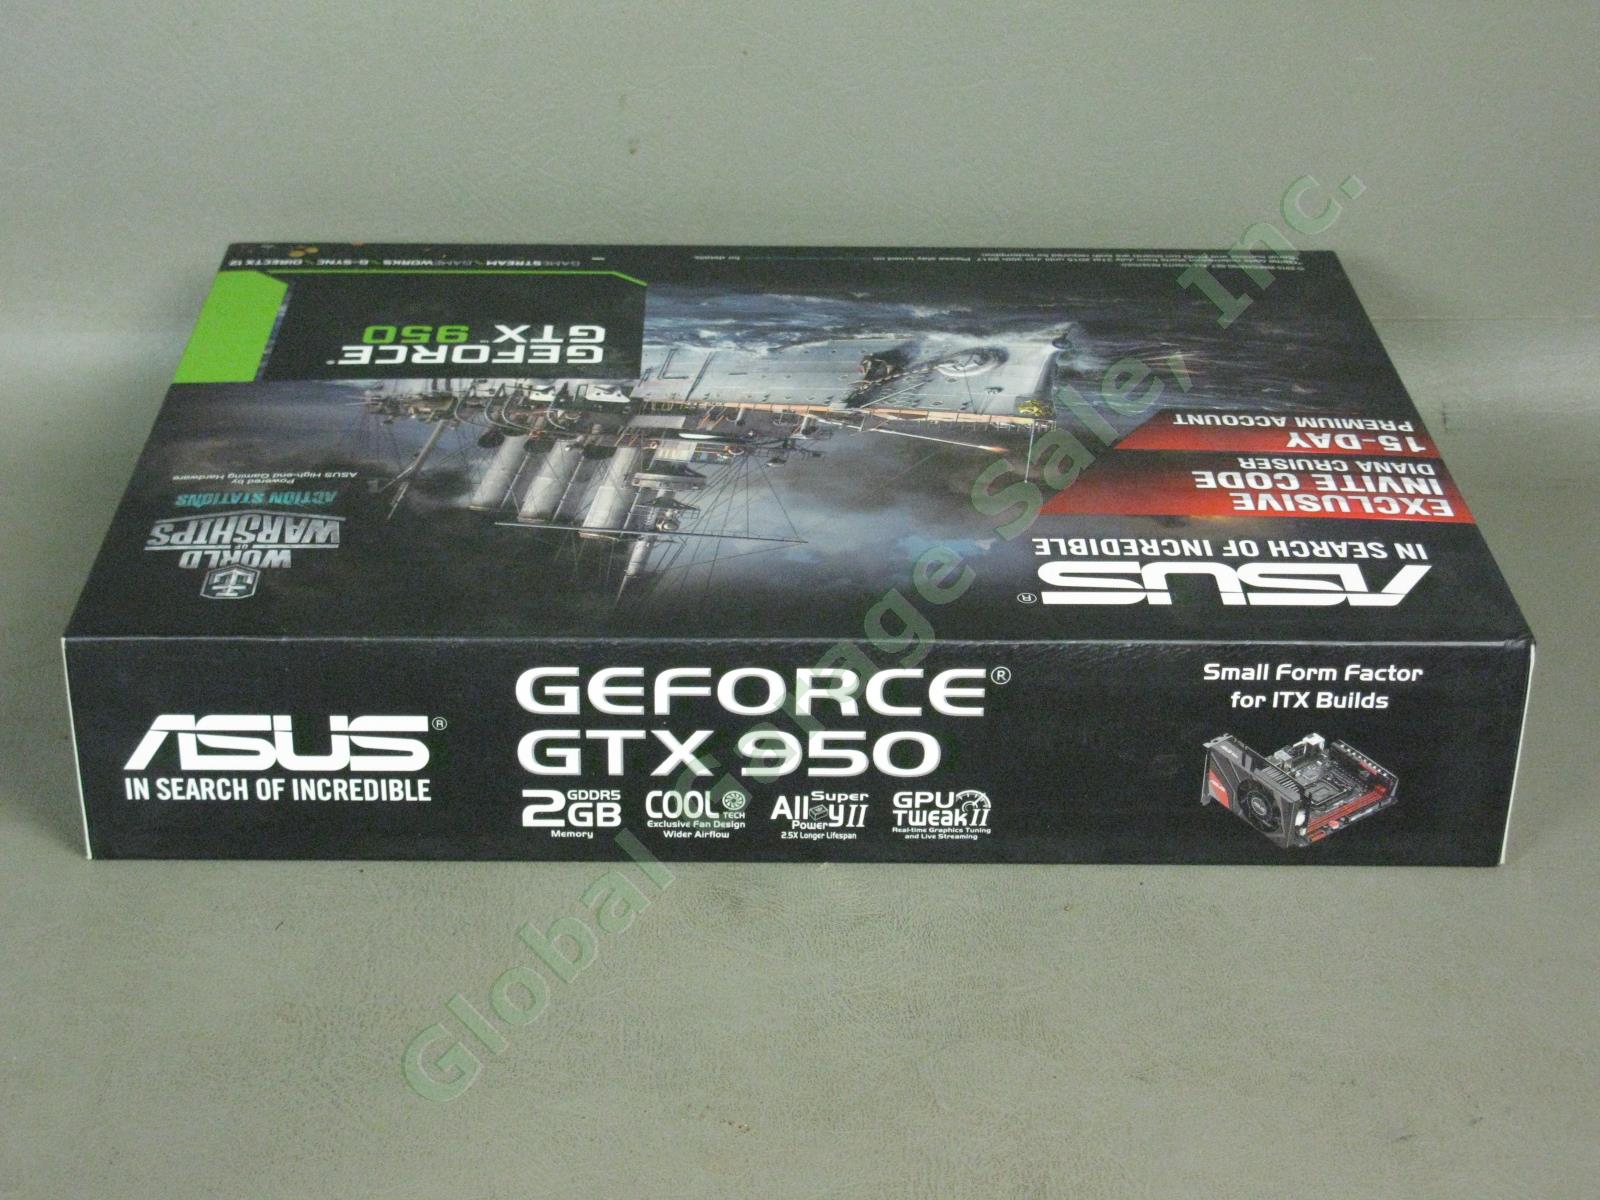 NEW Sealed ASUS Nvidia GeForce Mini-GTX 950 2GB GDDR5 GTX950 Video Graphics Card 2